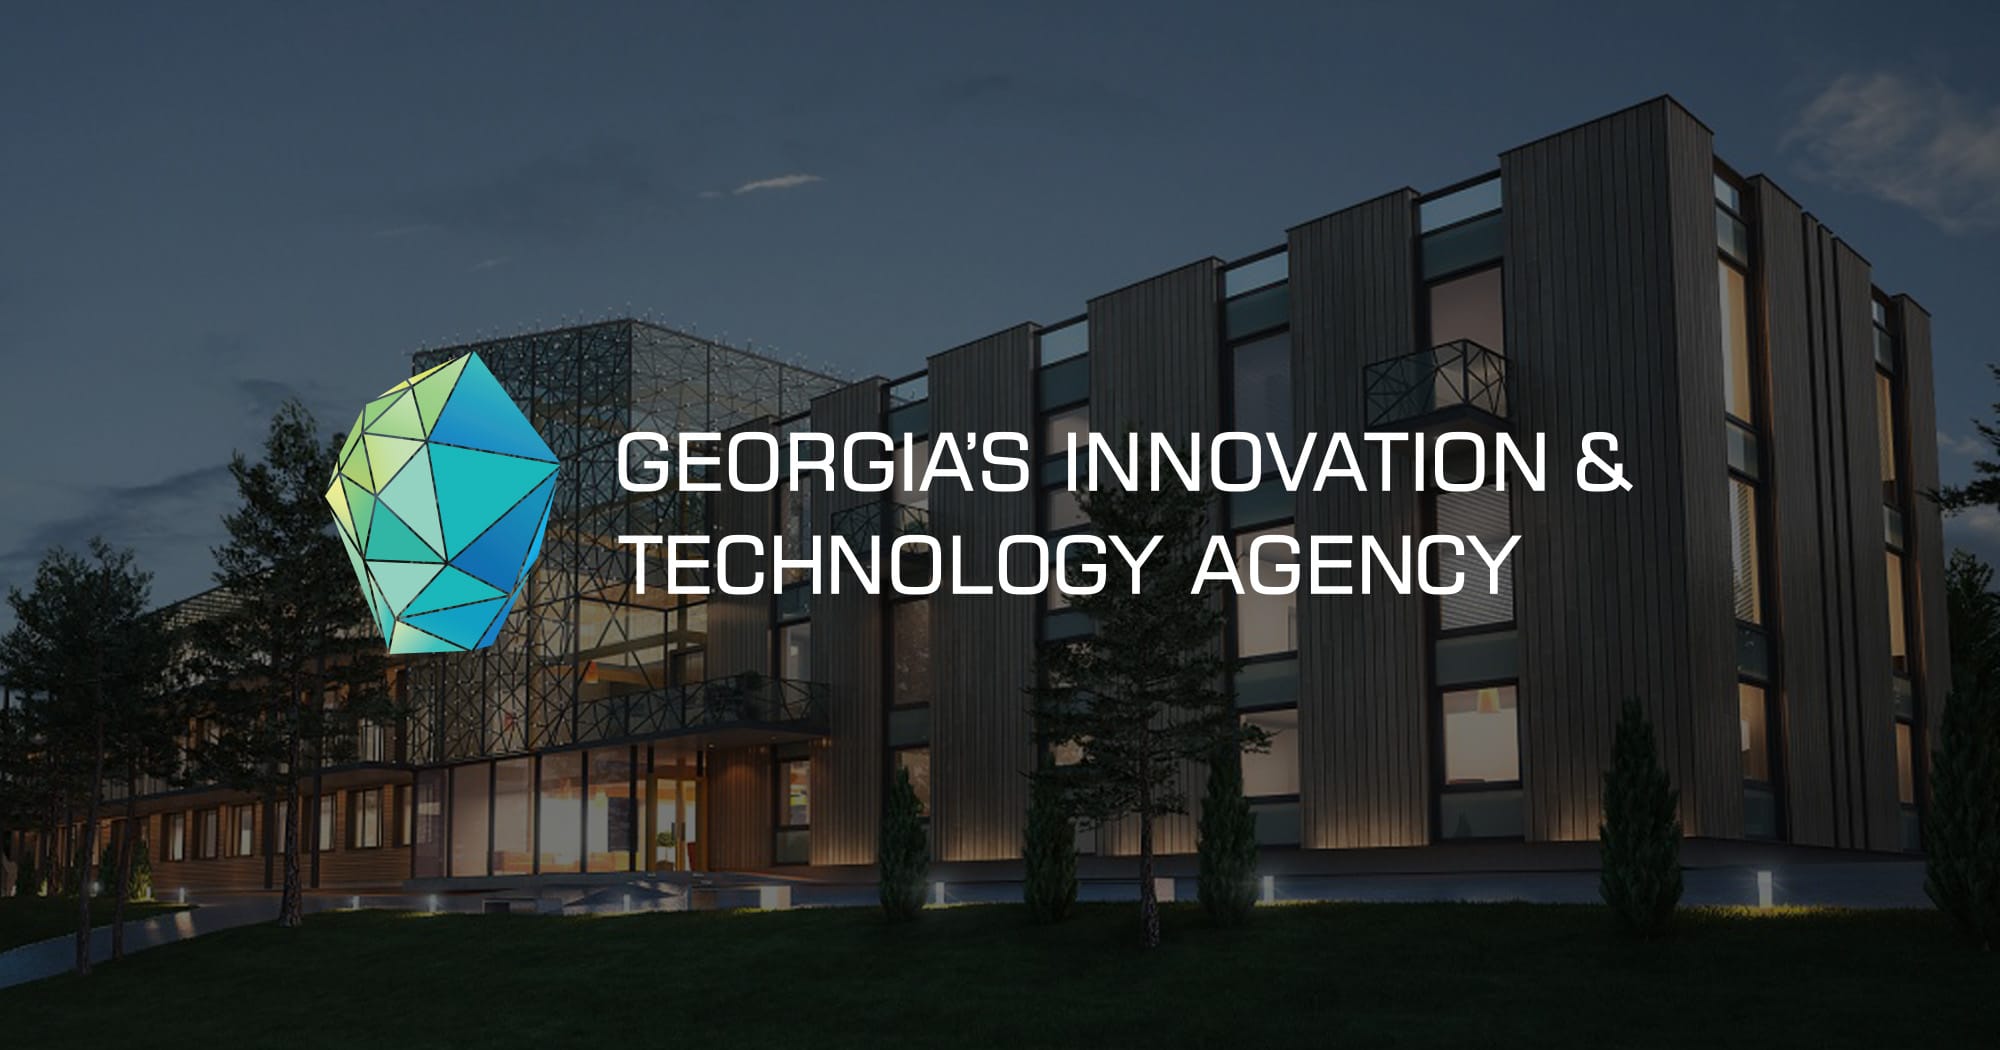 Technology Park and Digital Economy Development, Tbilisi, Georgia - 2015